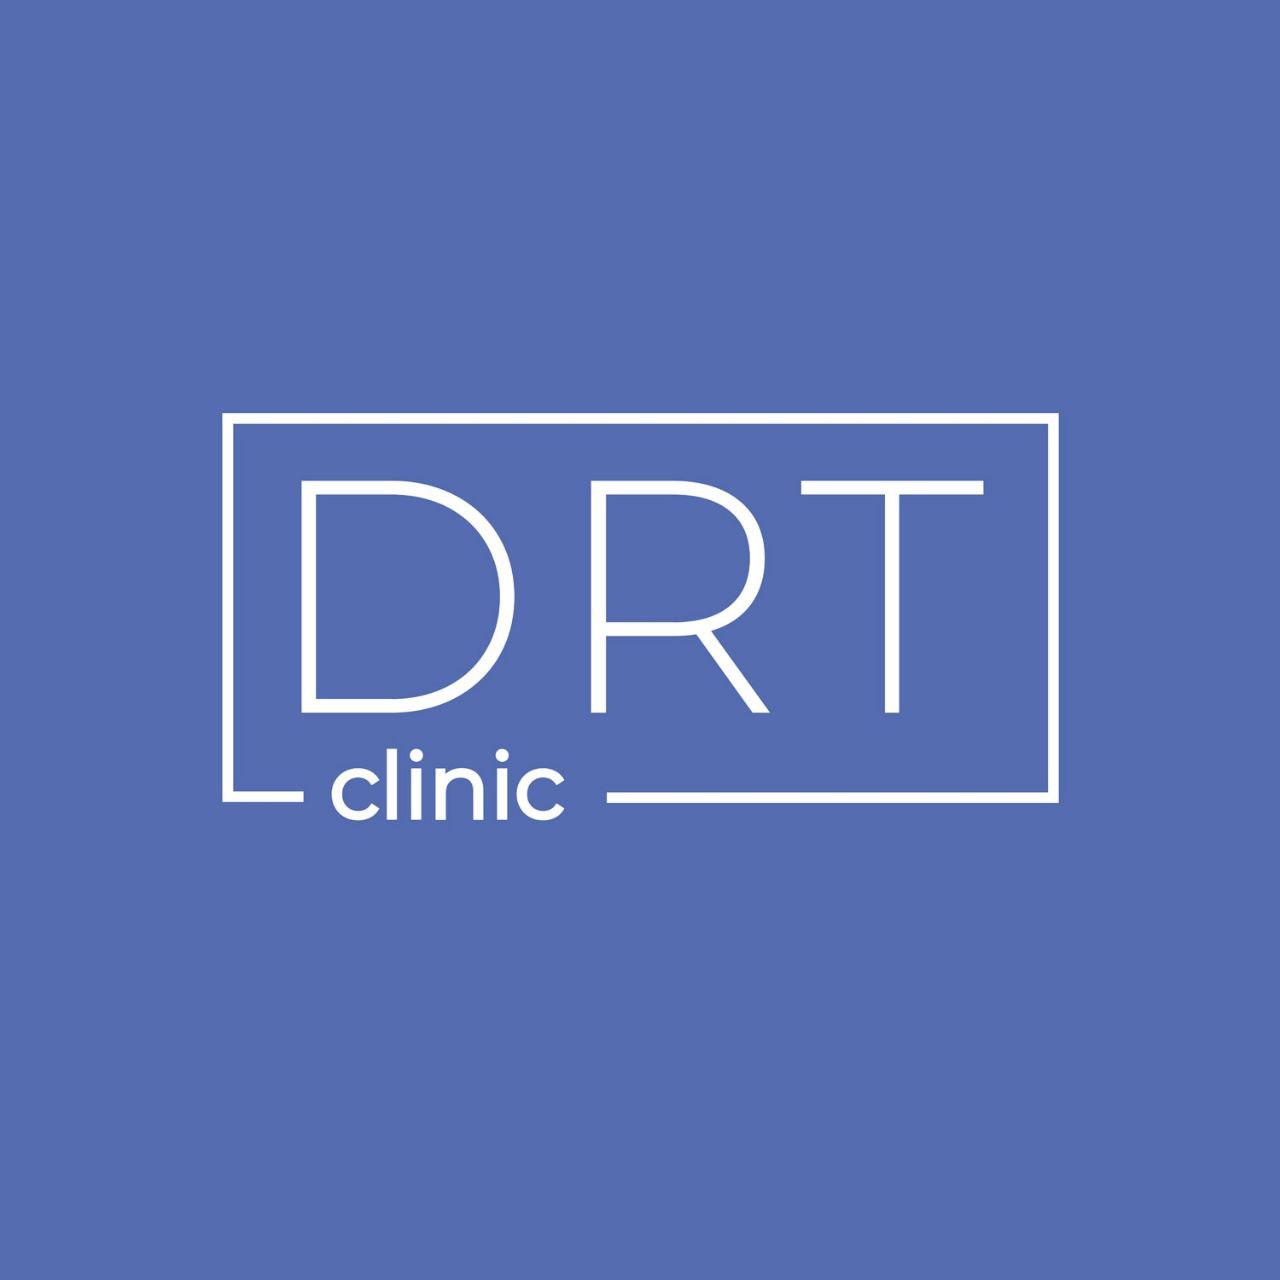 DRT clinic